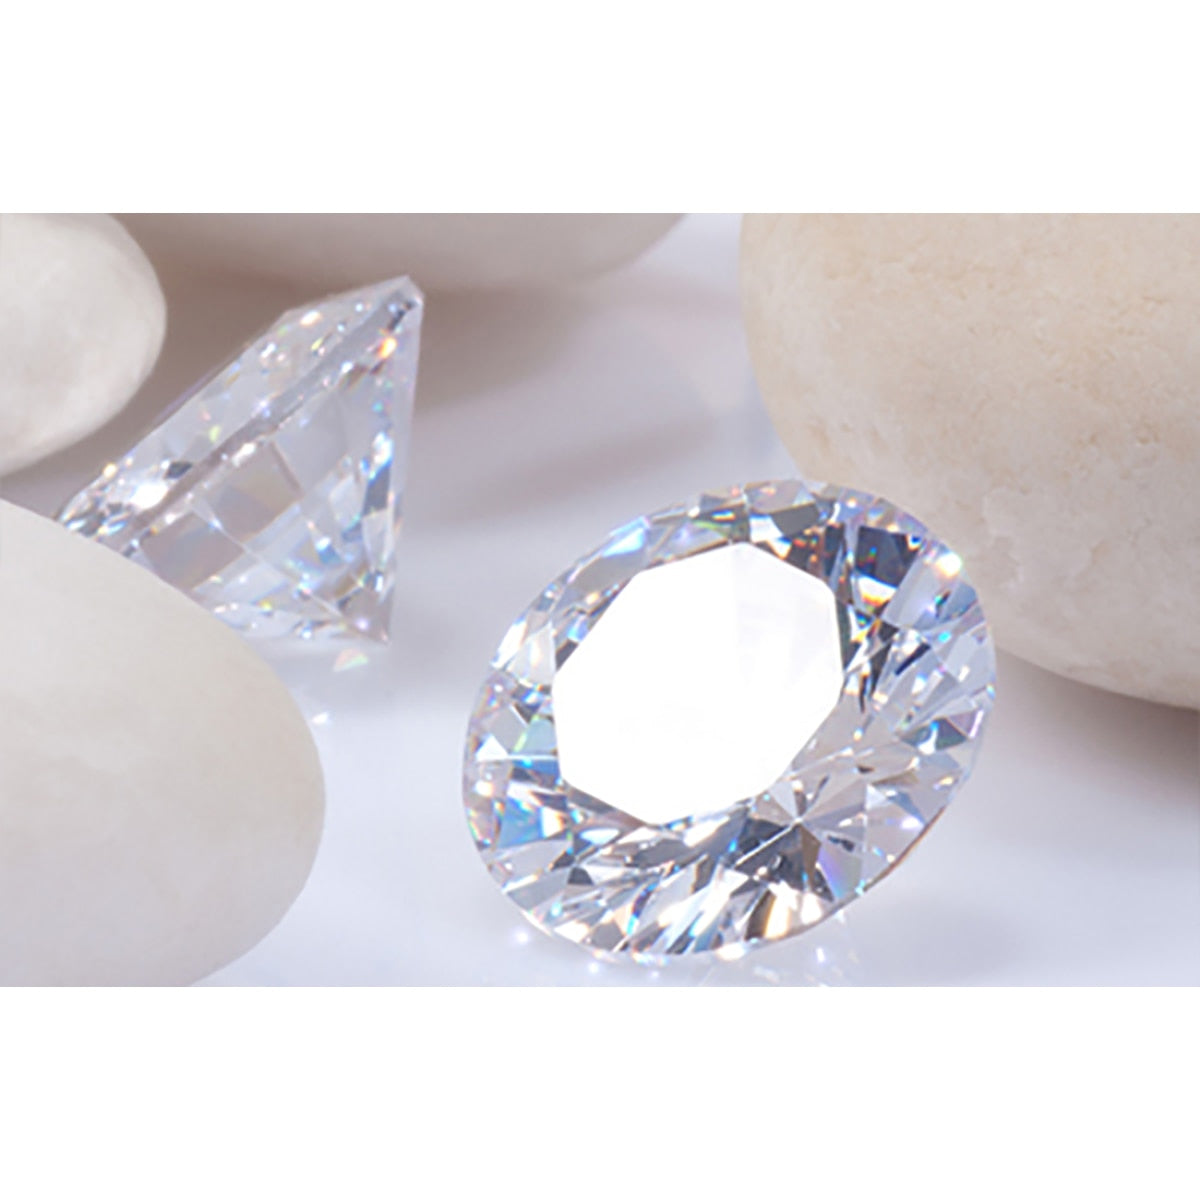 Genuine gemstones moissanite diamond stones from 0.1ct to 6ct  D Color VVS1